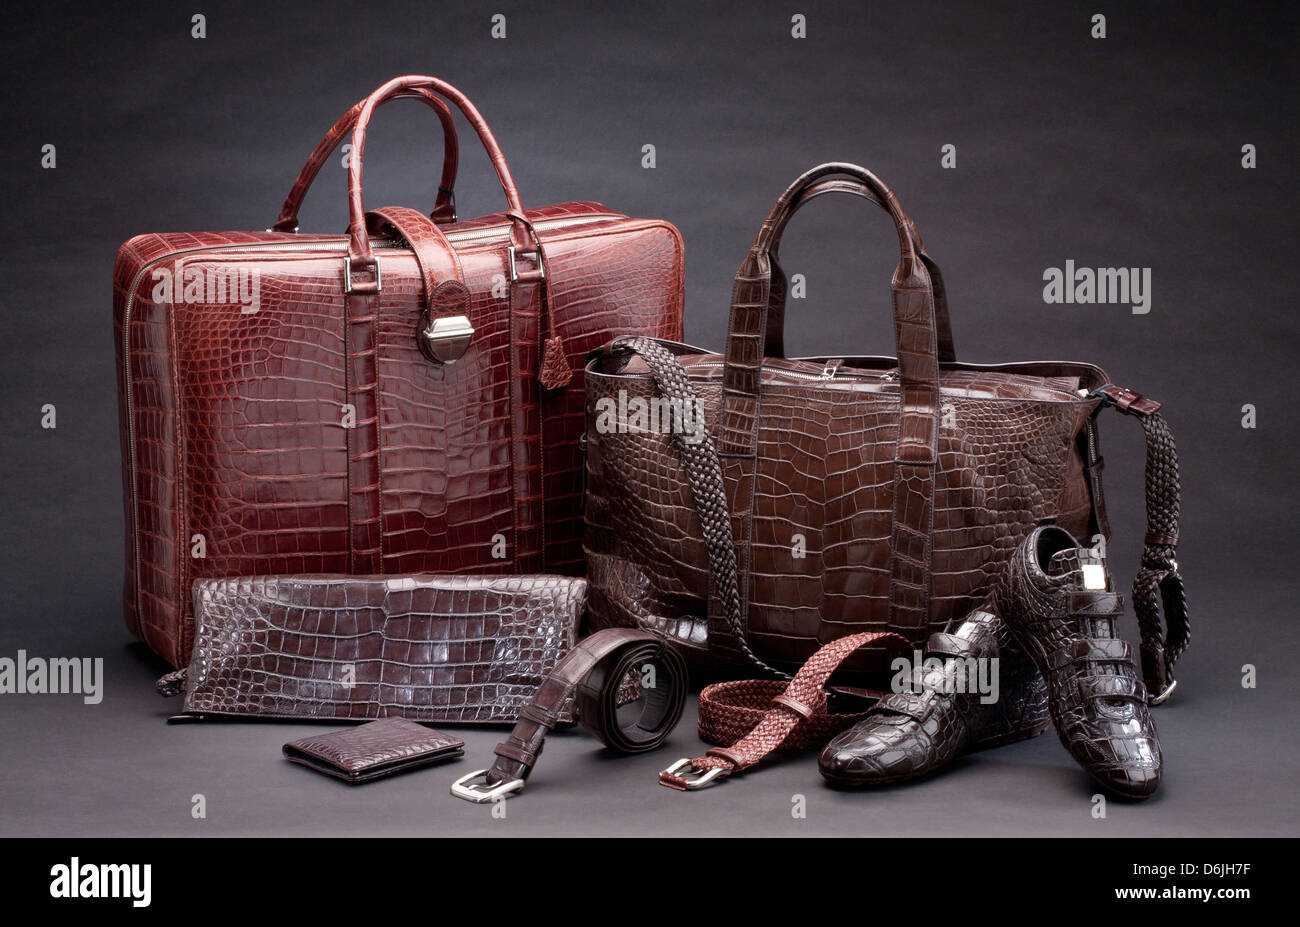 Fashion Alligator Bag and Luxury Alligator Briefcase for Men